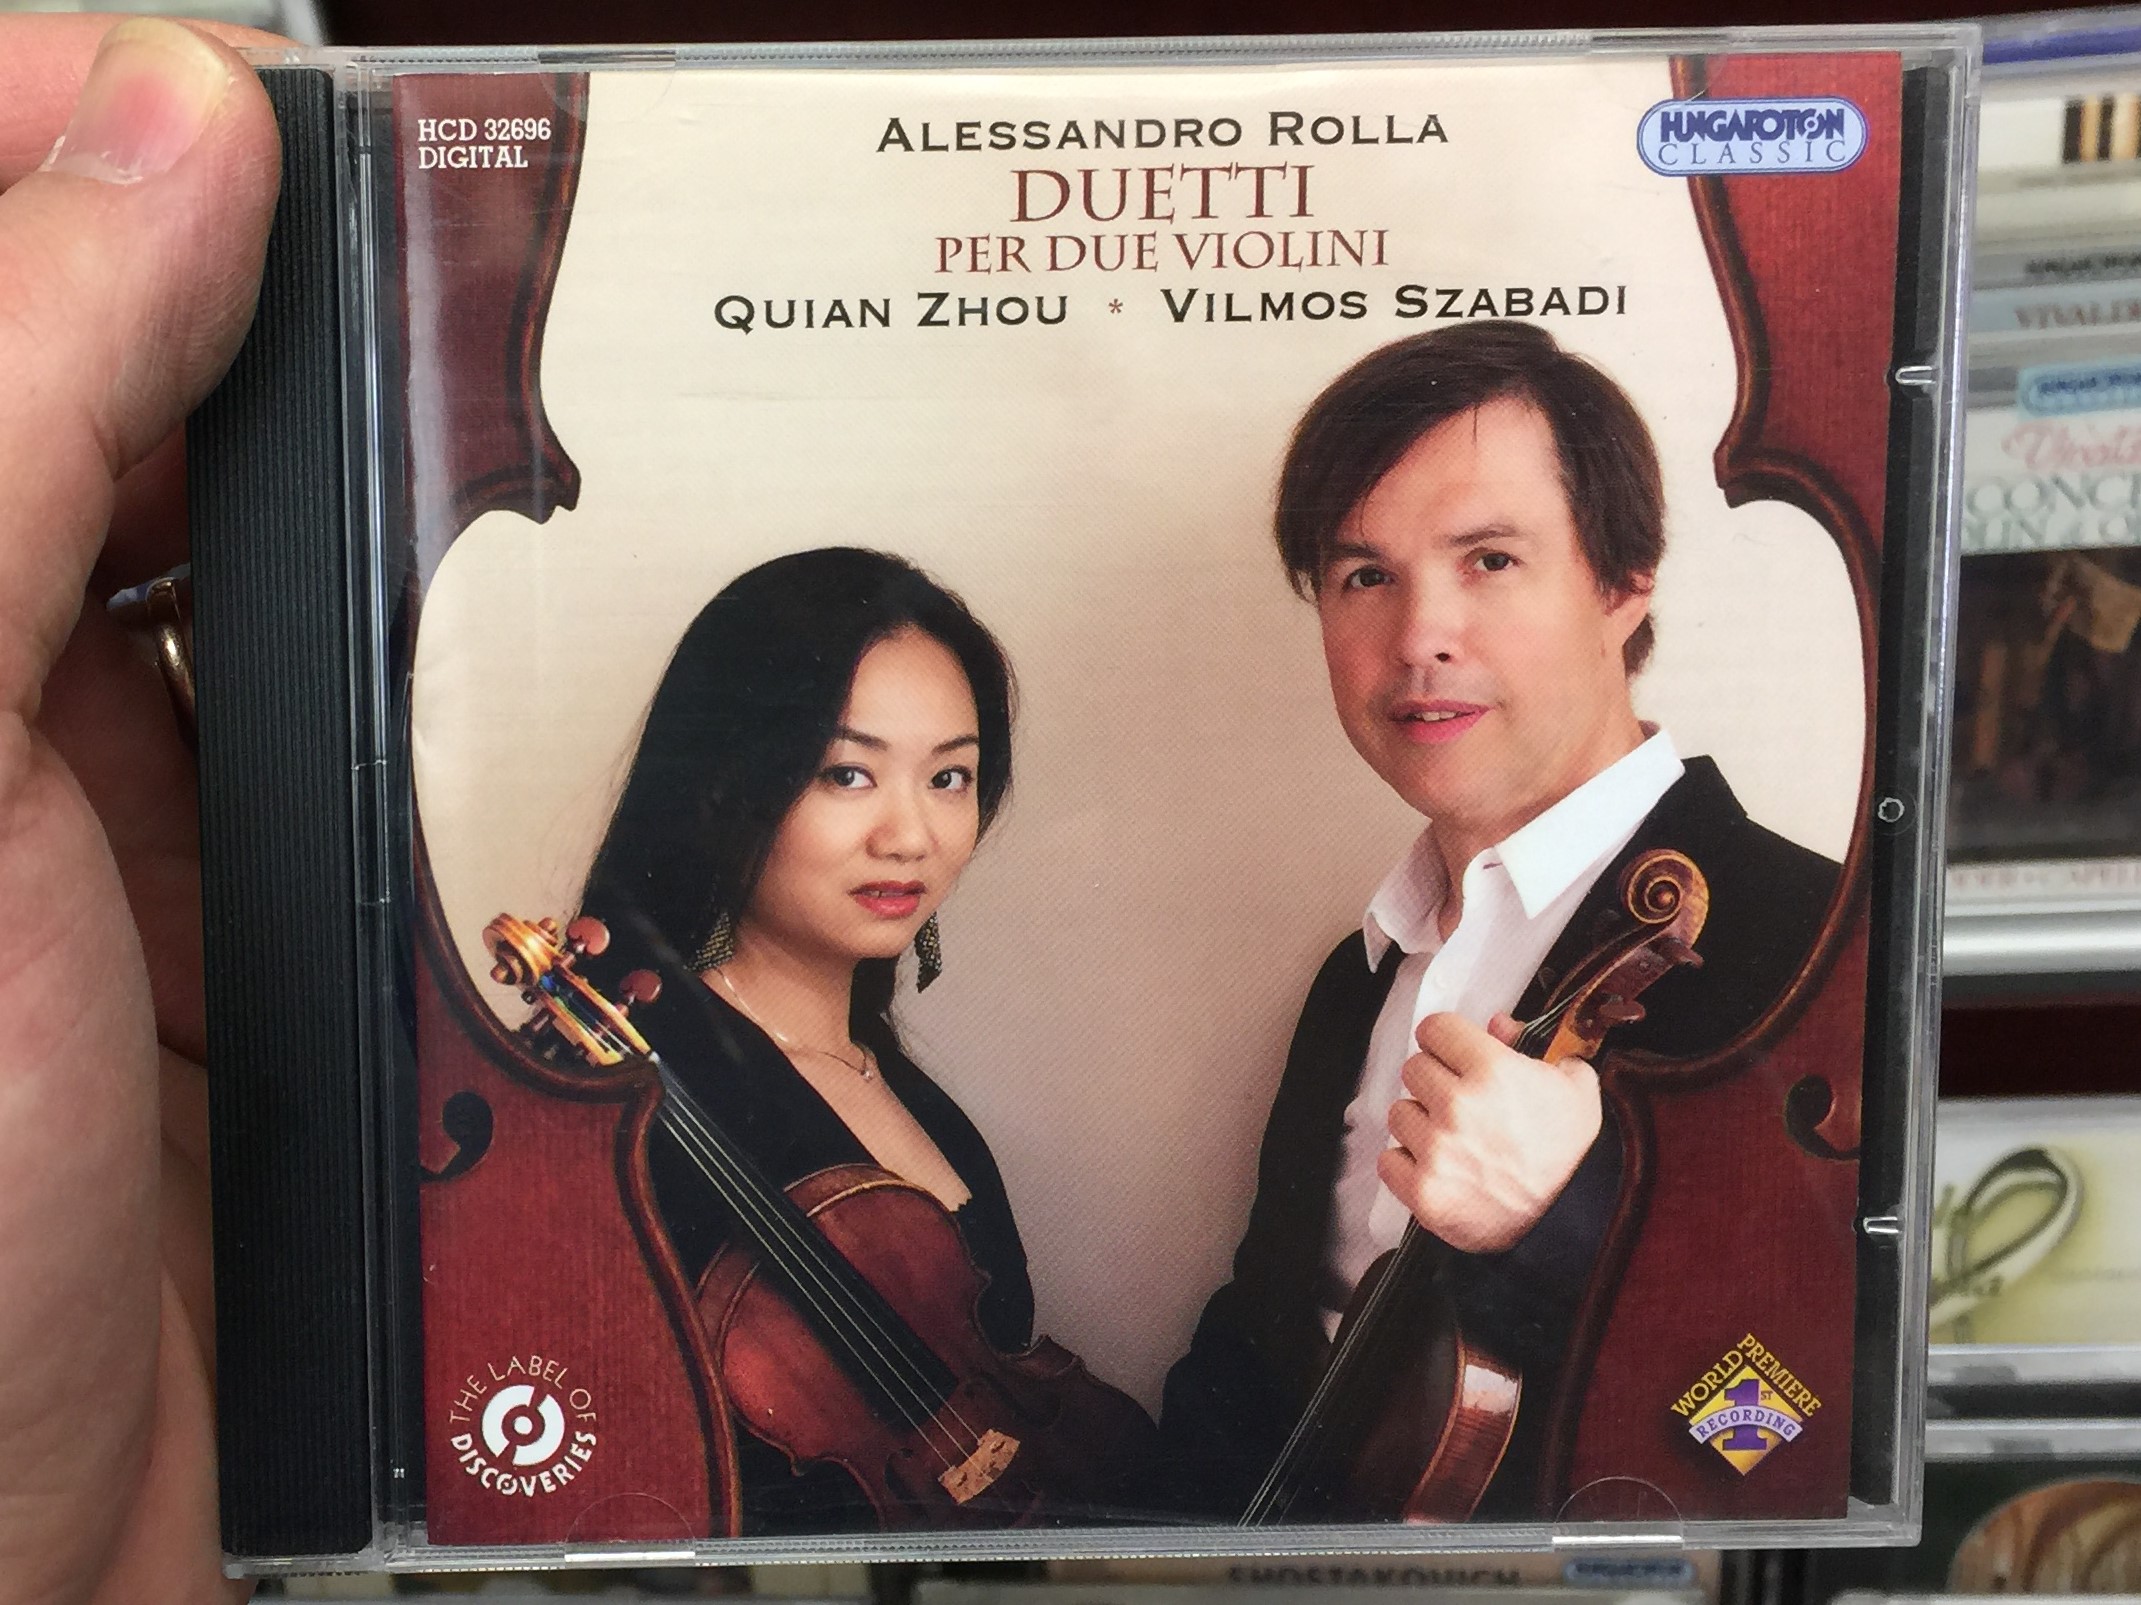 alessandro-rolla-duetti-per-due-violini-quian-zhou-vilmos-szabadi-hungaroton-classic-audio-cd-2012-stereo-hcd-32696-1-.jpg